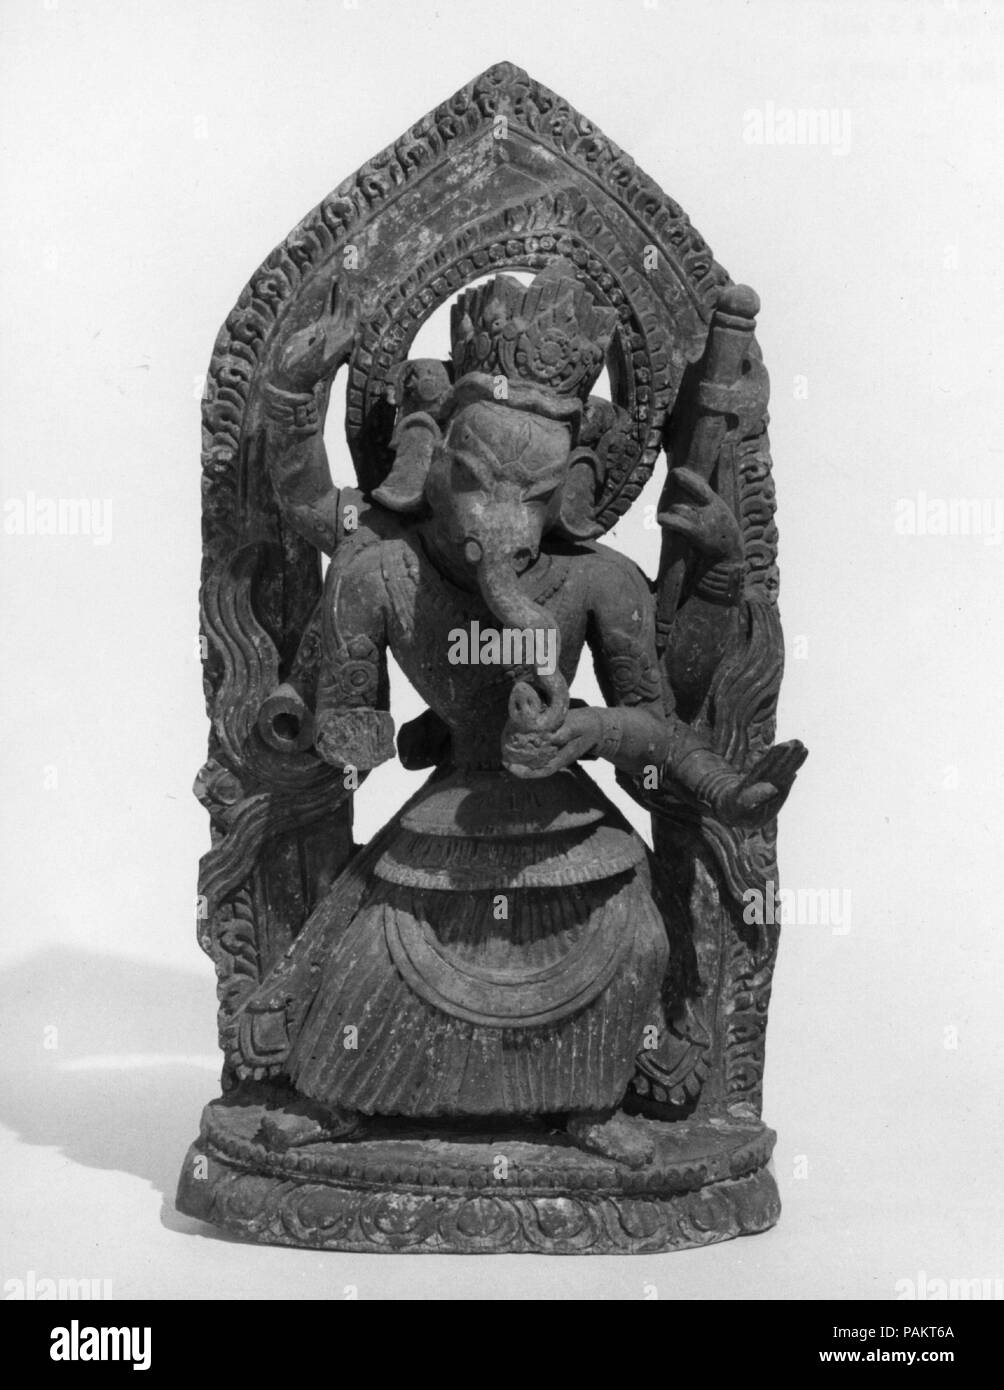 Standing Ganesha. Culture: Nepal (Kathmandu Valley). Dimensions: H. 20 1/4 in. (52.1 cm); W. 10 1/2 in. (26.7 cm); D. 5 3/4 in. (14.6 cm). Date: 16th-17th century. Museum: Metropolitan Museum of Art, New York, USA. Stock Photo